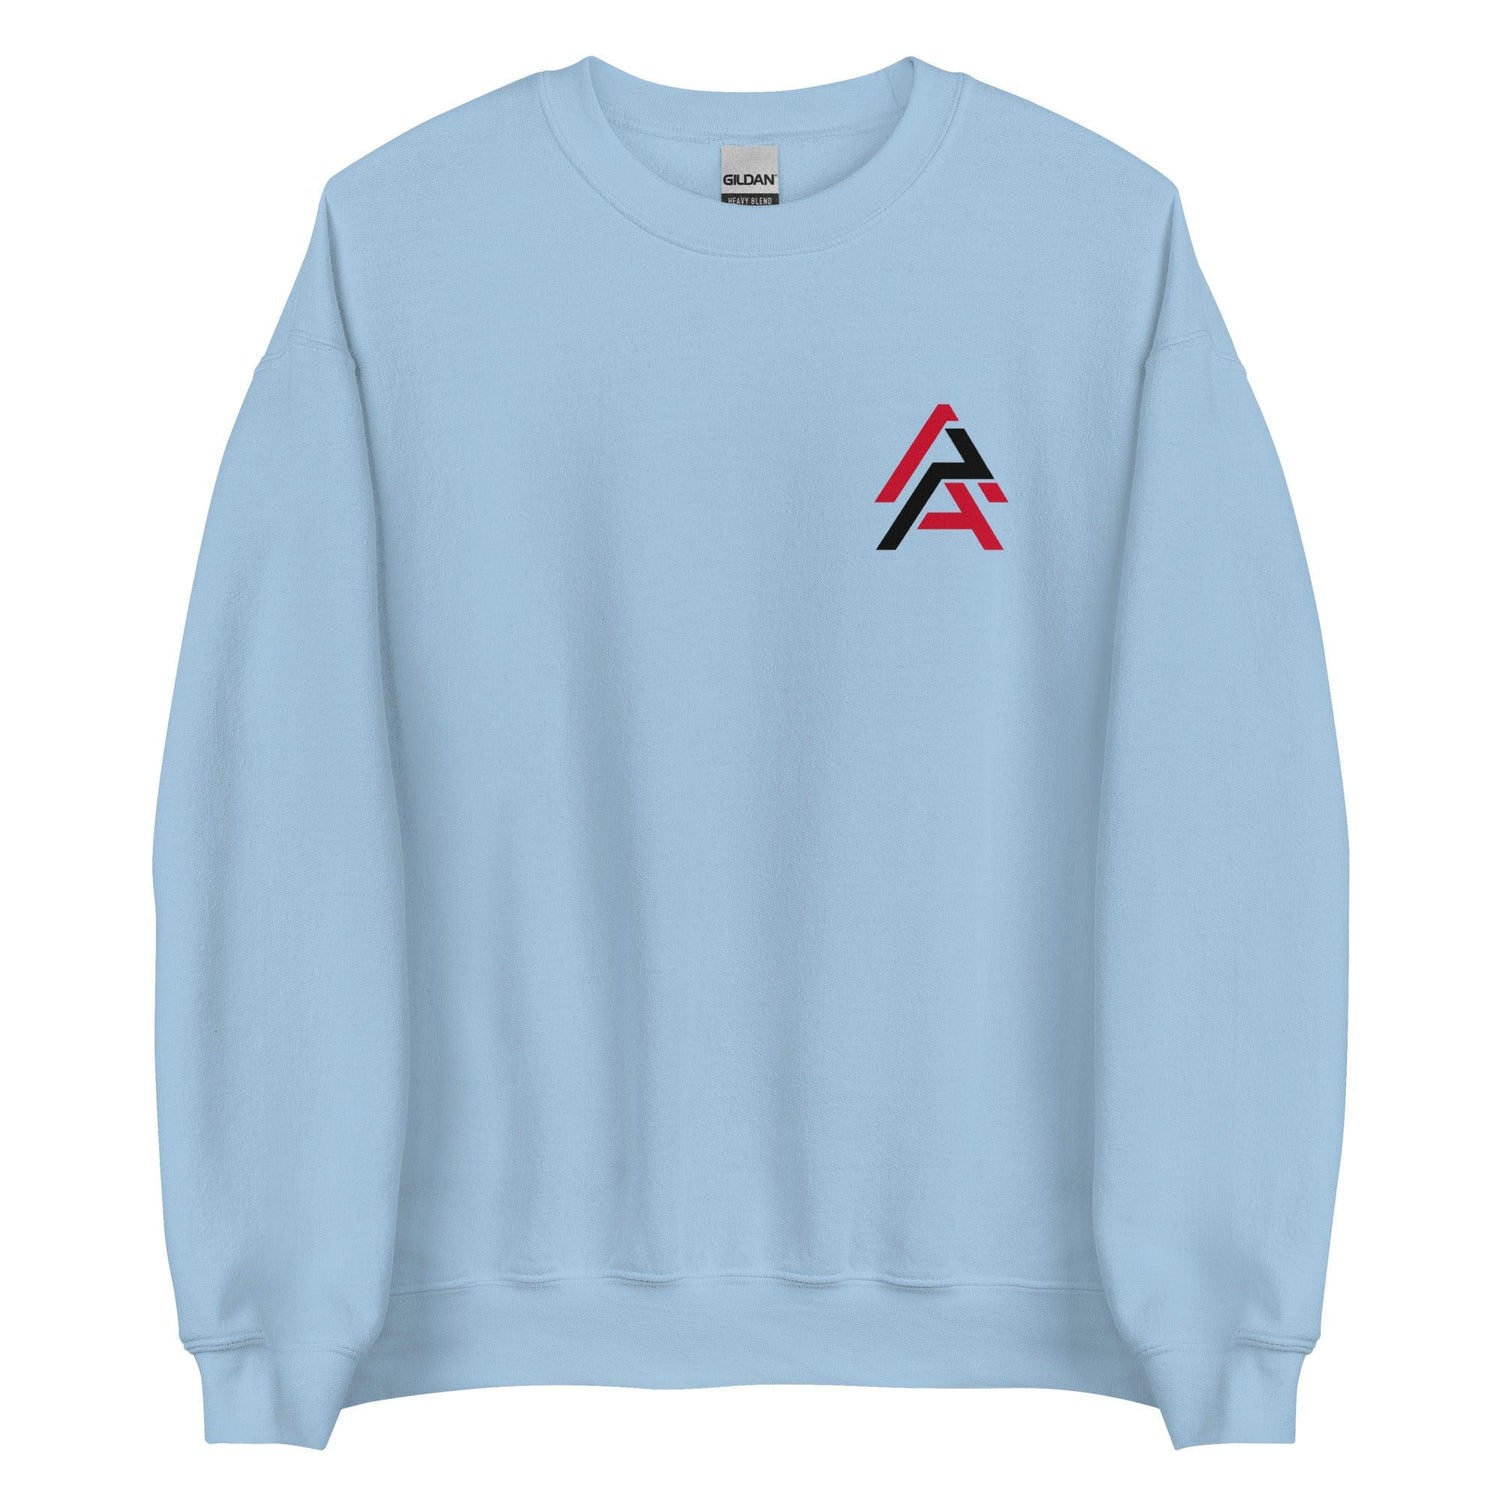 Anthony Alford “AA” Sweatshirt - Fan Arch